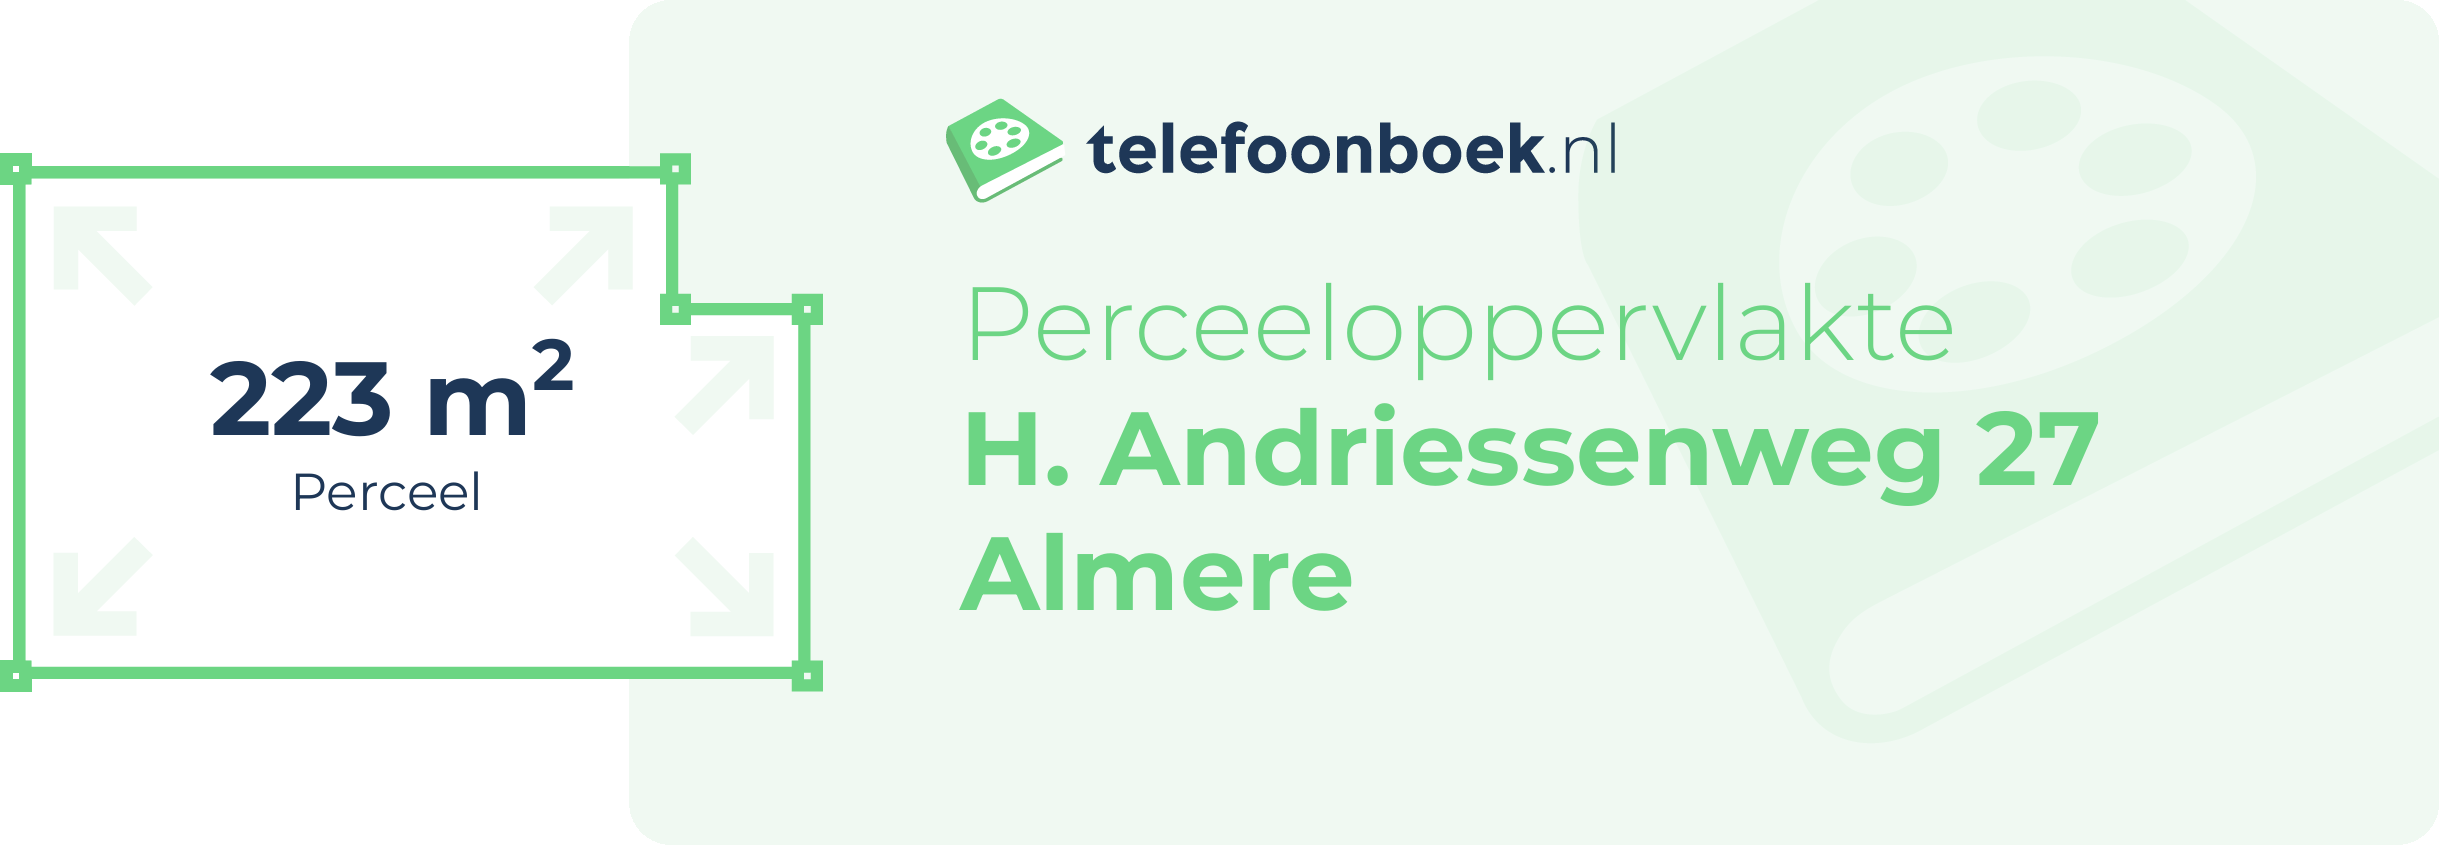 Perceeloppervlakte H. Andriessenweg 27 Almere